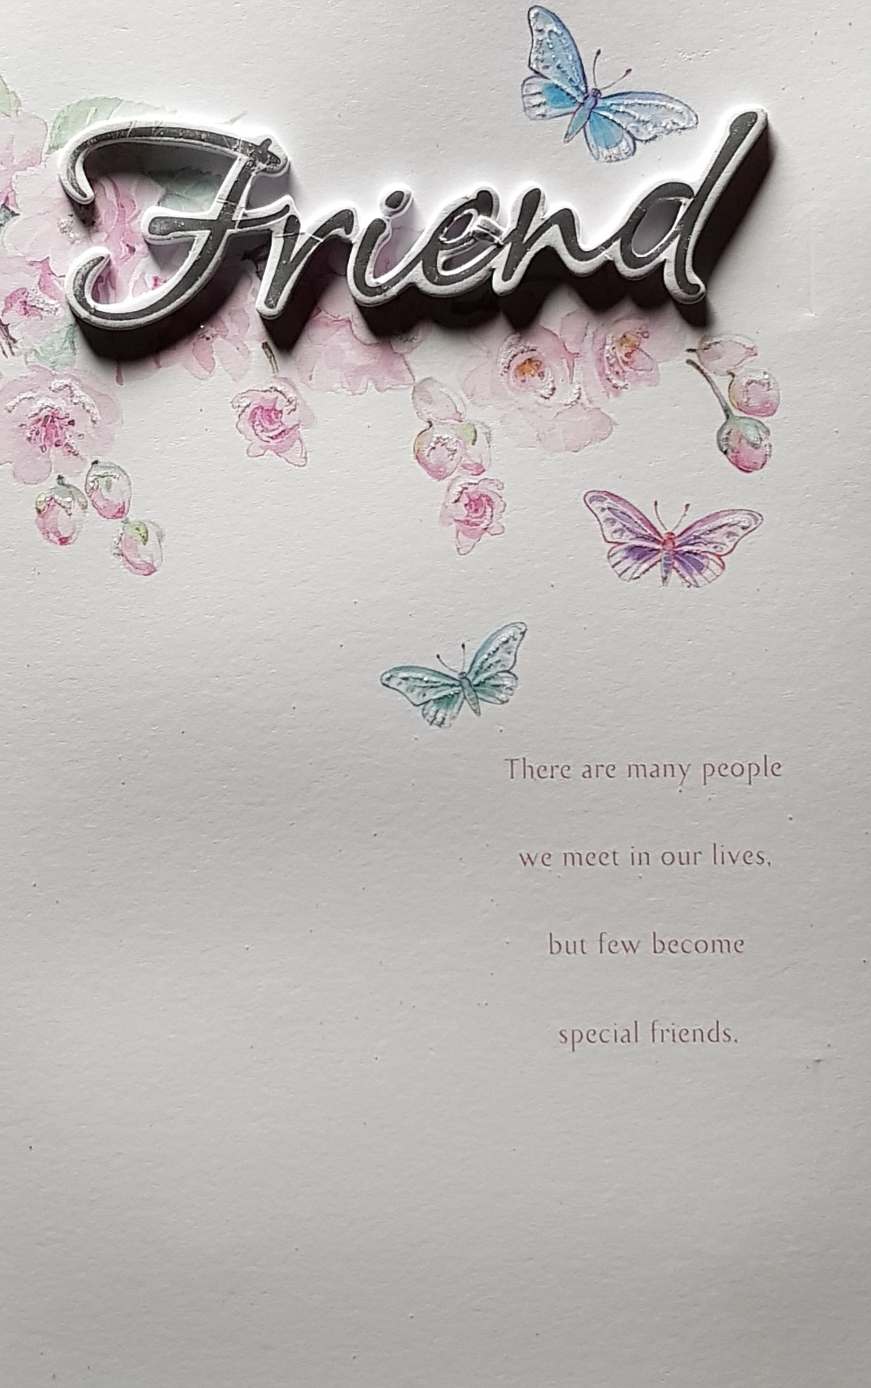 Birthday Card - Friend / A Branch Of Pink Flowers & Three Butterflies